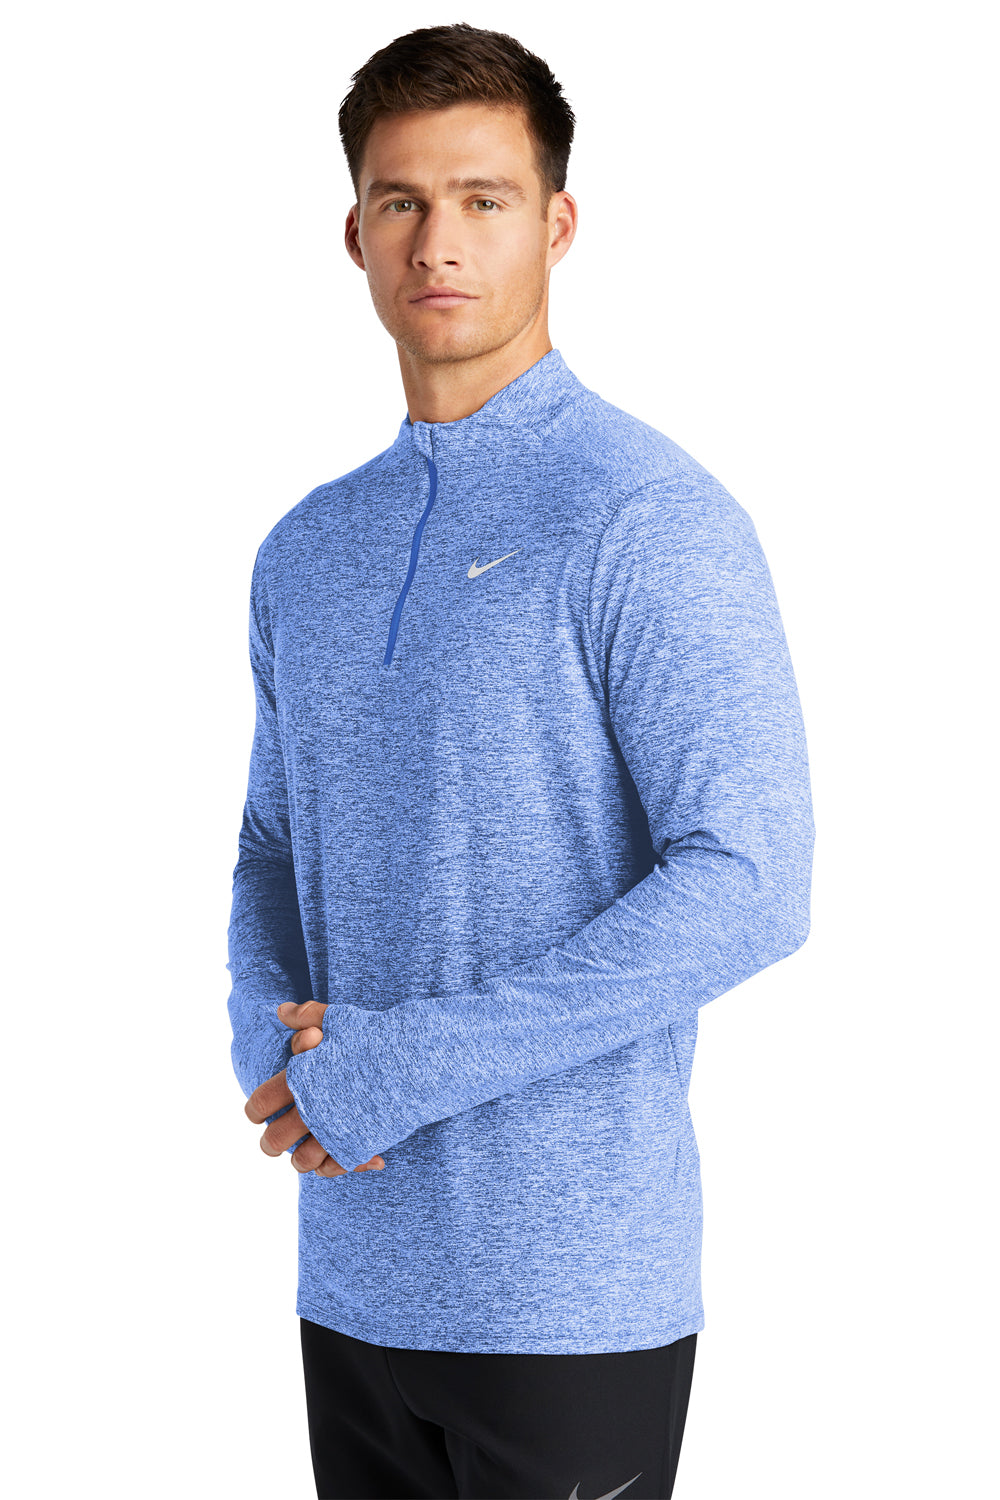 Nike NKDH4949 Mens Element Dri-Fit Moisture Wicking 1/4 Zip Sweatshirt Heather Royal Blue Model 3Q